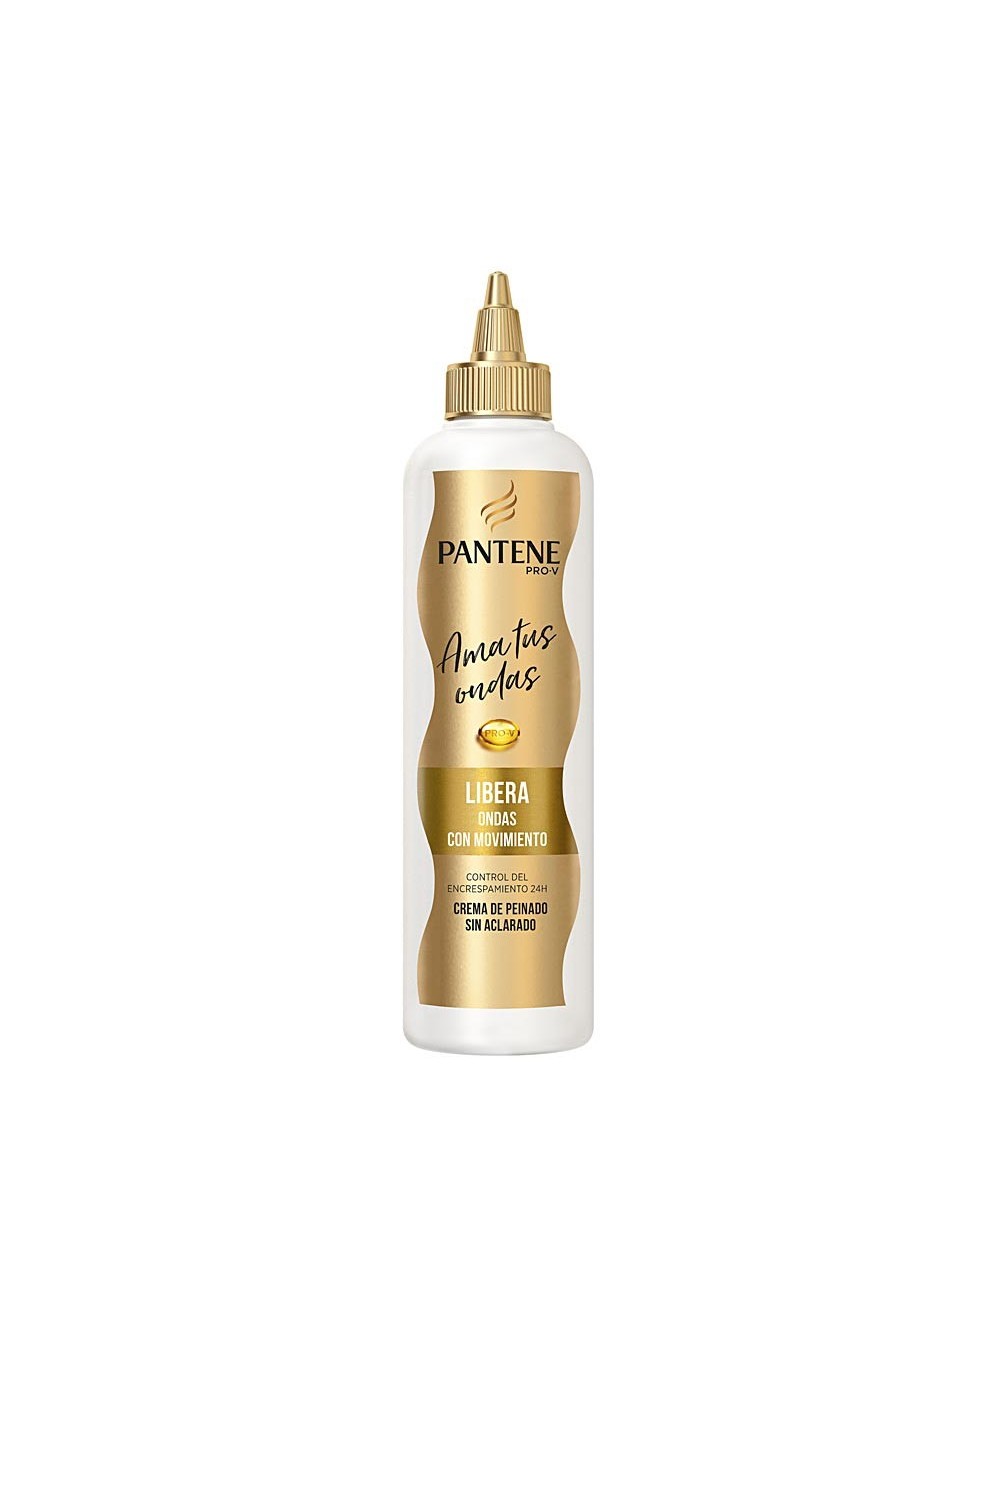 Pantene Pro-V Waves Hairstyle Cream Without Rinse 270ml